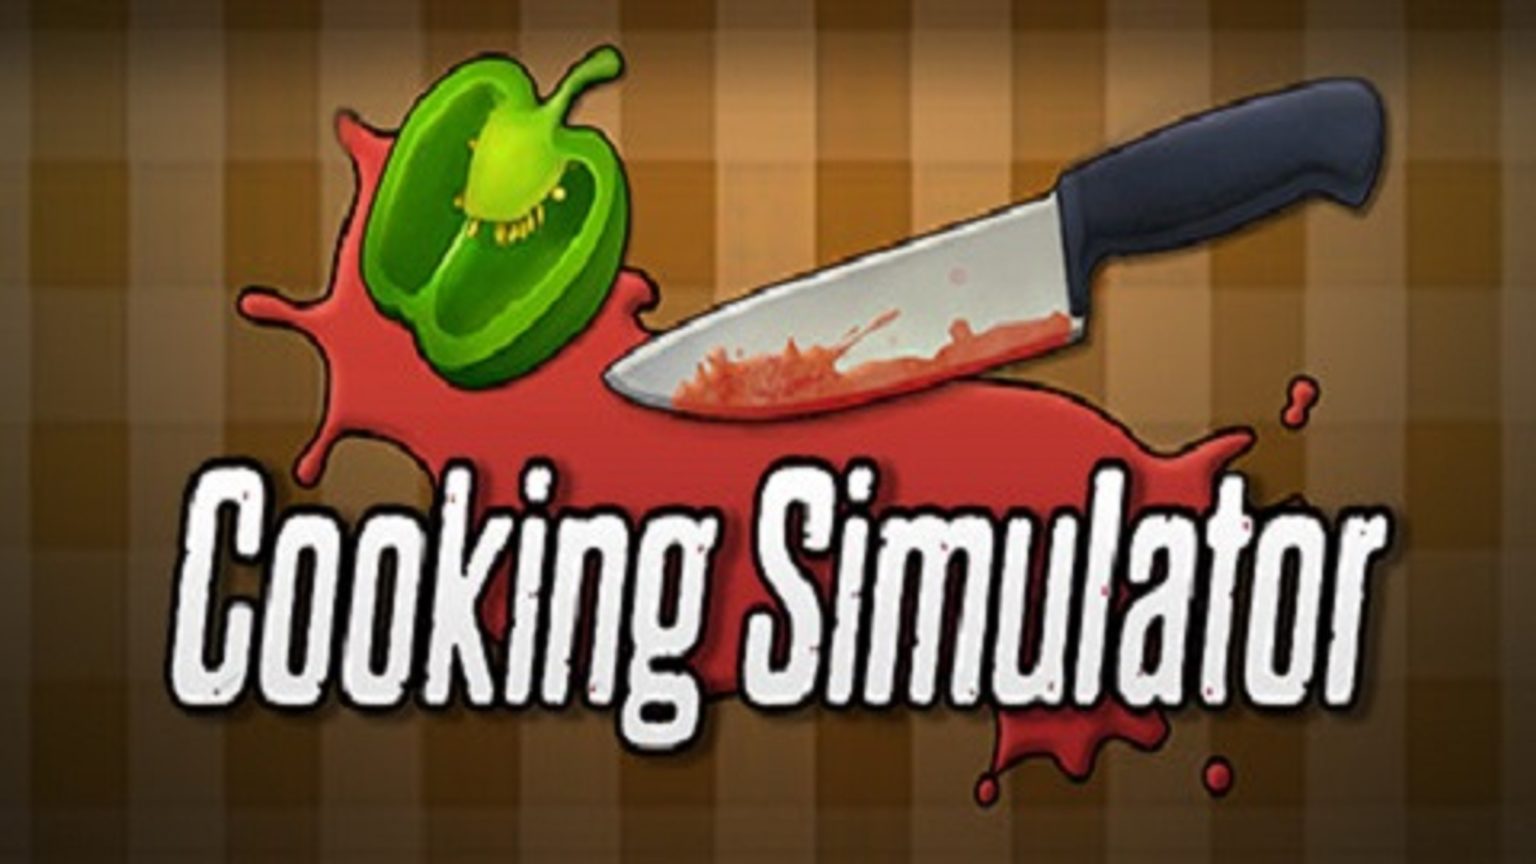 cooking simulator mac download free